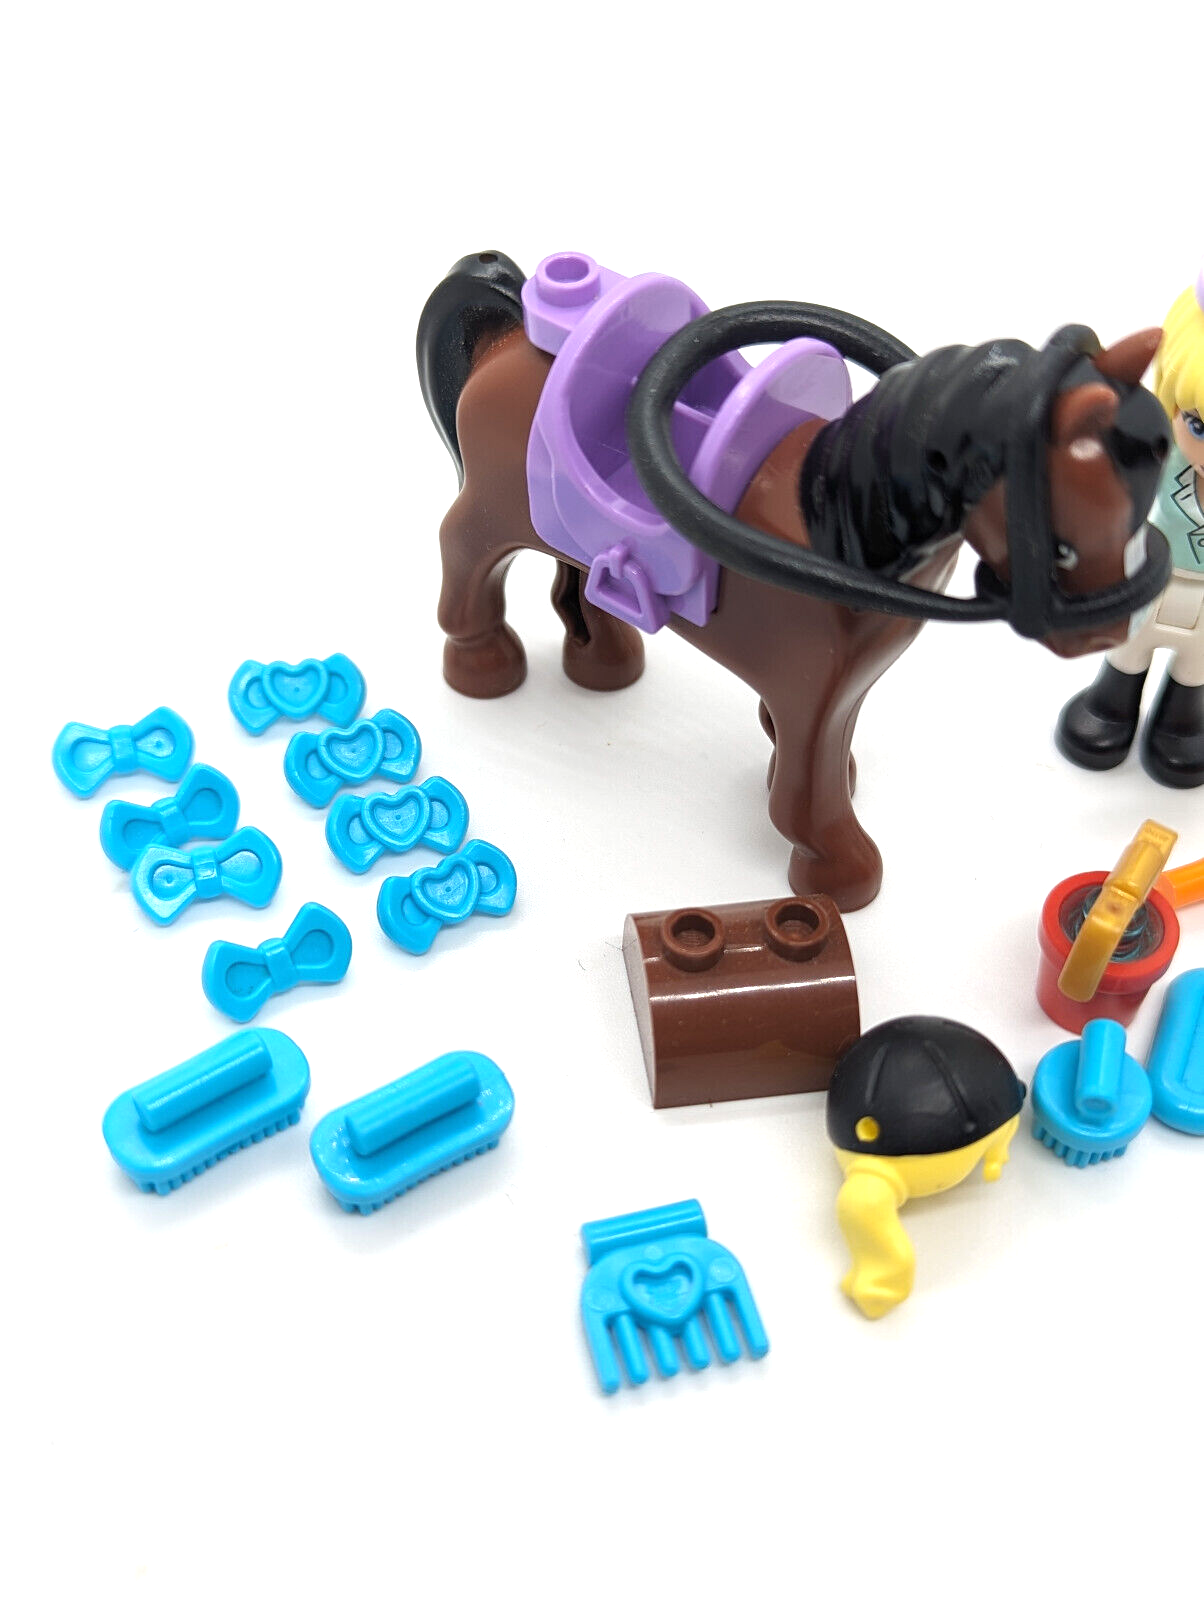 LEGO Friends Minifigure Lot - Stephanie & Accessories 41057 frnd068 Horse Show